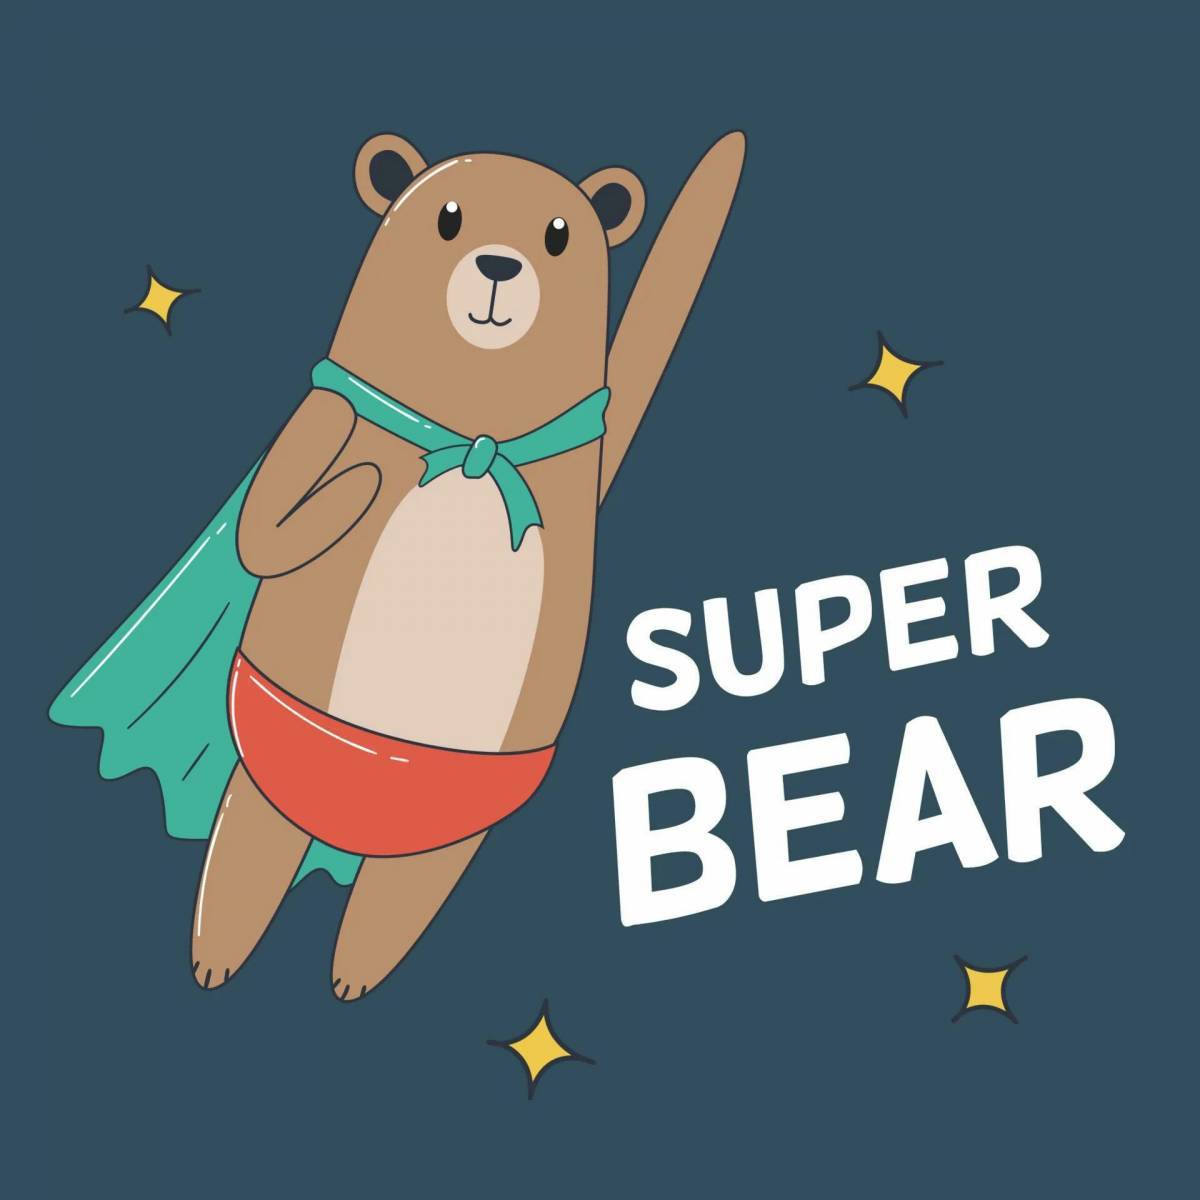 Super bear adventure #11